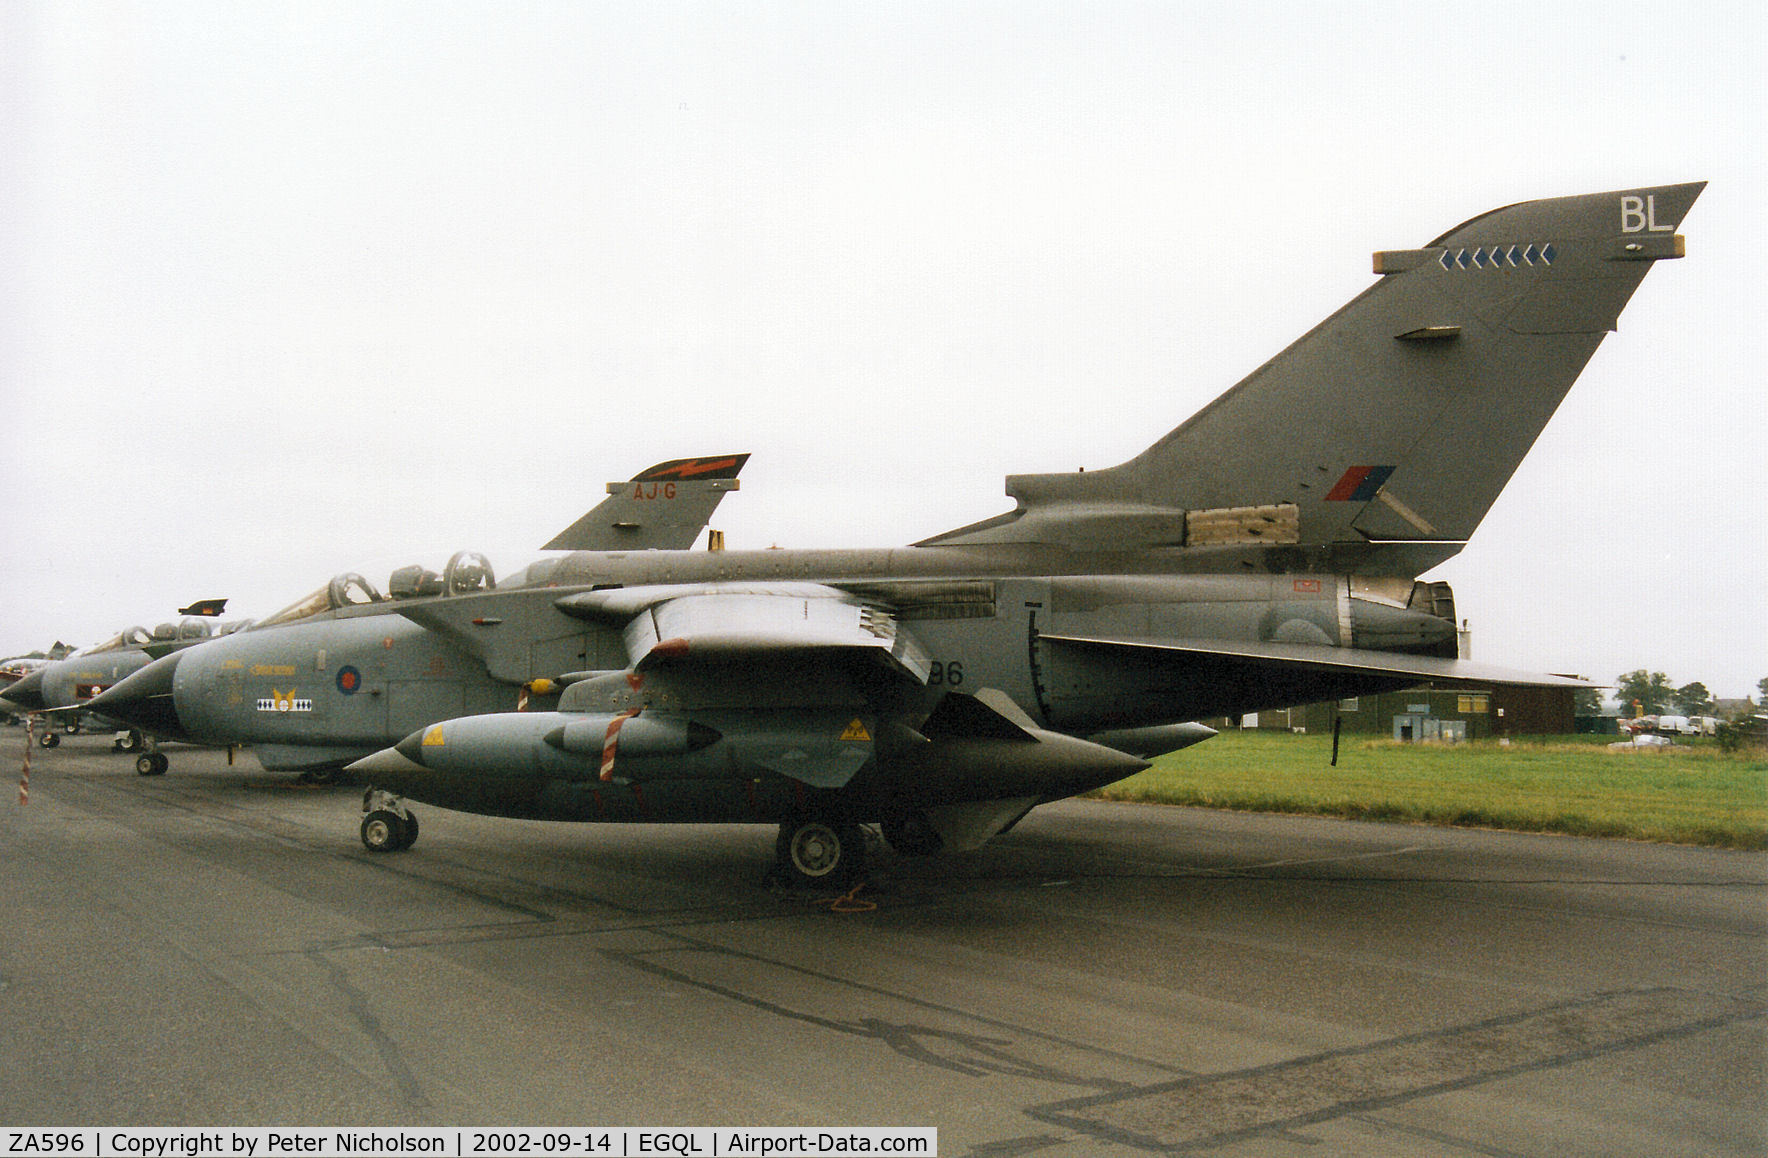 ZA596, 1982 Panavia Tornado GR.4 C/N 113/BS037/3060, Tornado GR.4, callsign Scarab 1, of 14 Squadron on display at the 2002 RAF Leuchars Airshow.